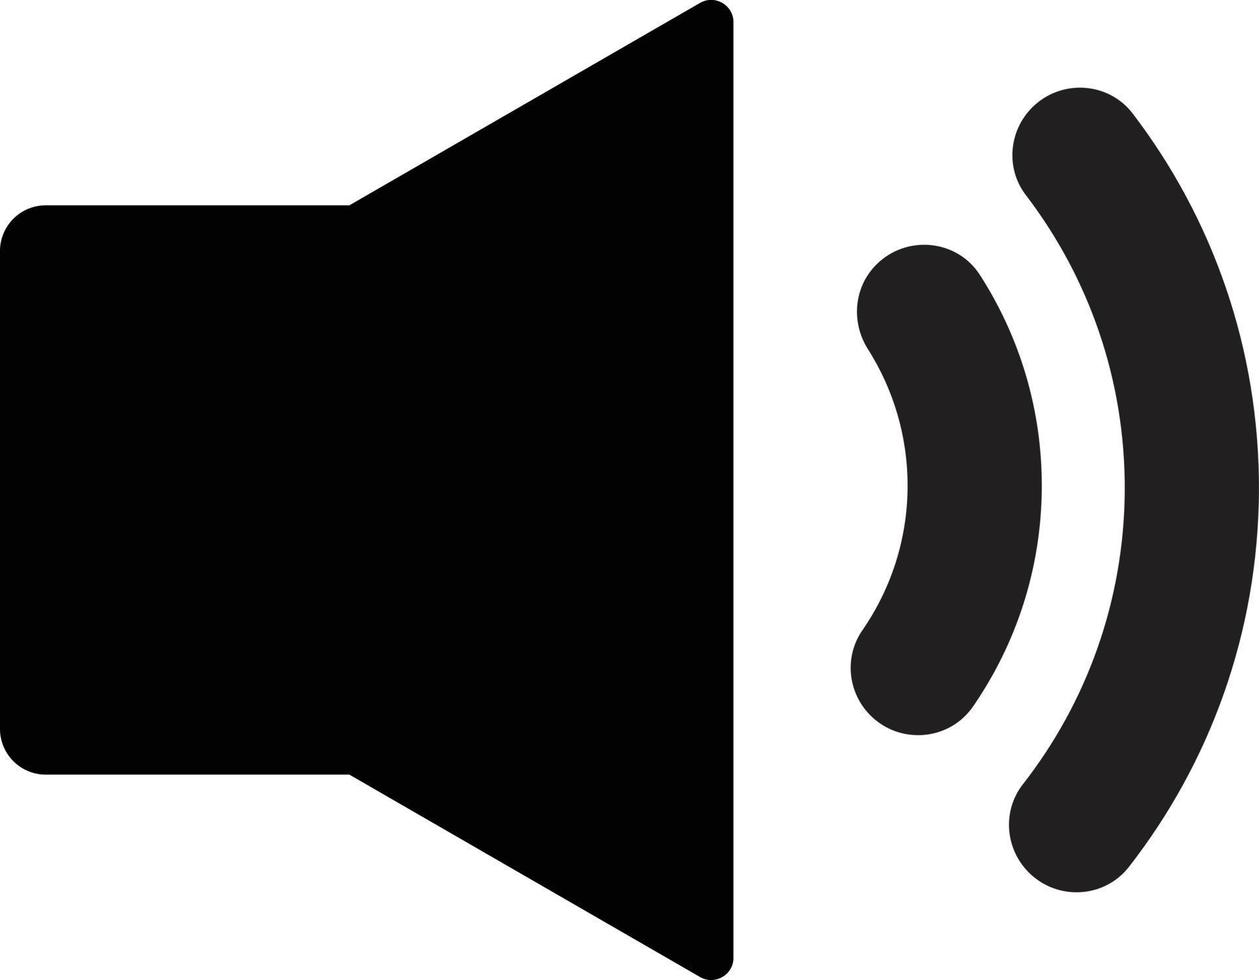 speaker volume icon vector . Audio speaker volume icon for apps and websites